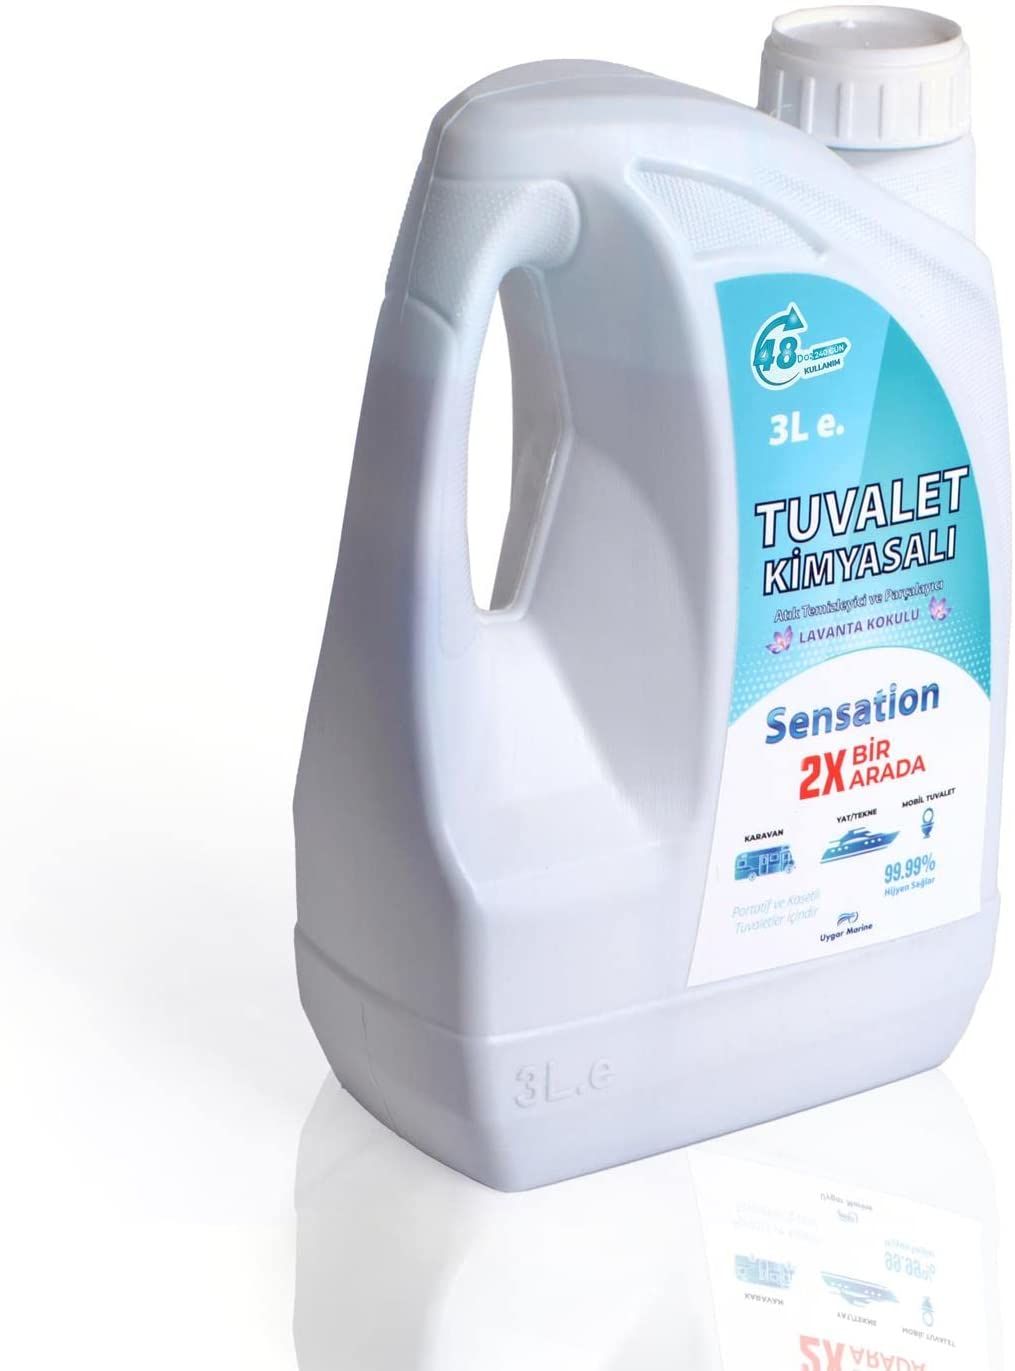 Sensation Karavan Tekne Tuvalet Kimyasalı 3Lt